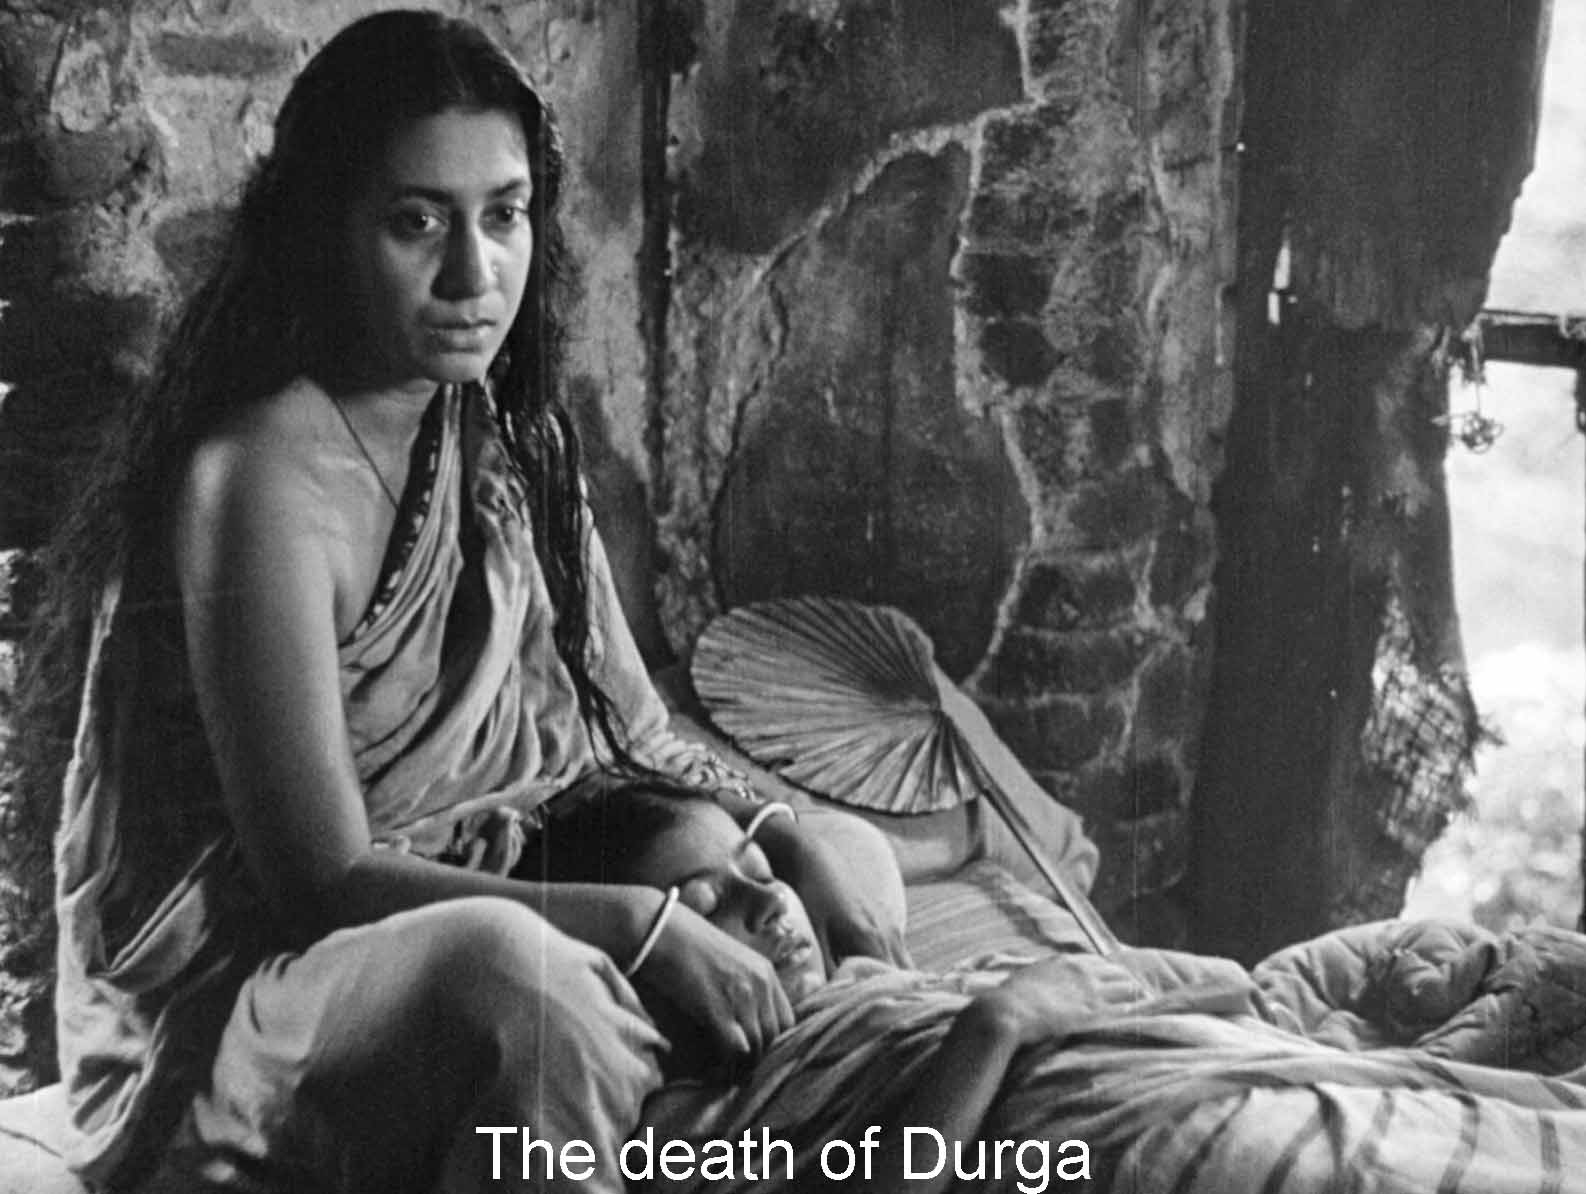 The death of Durga